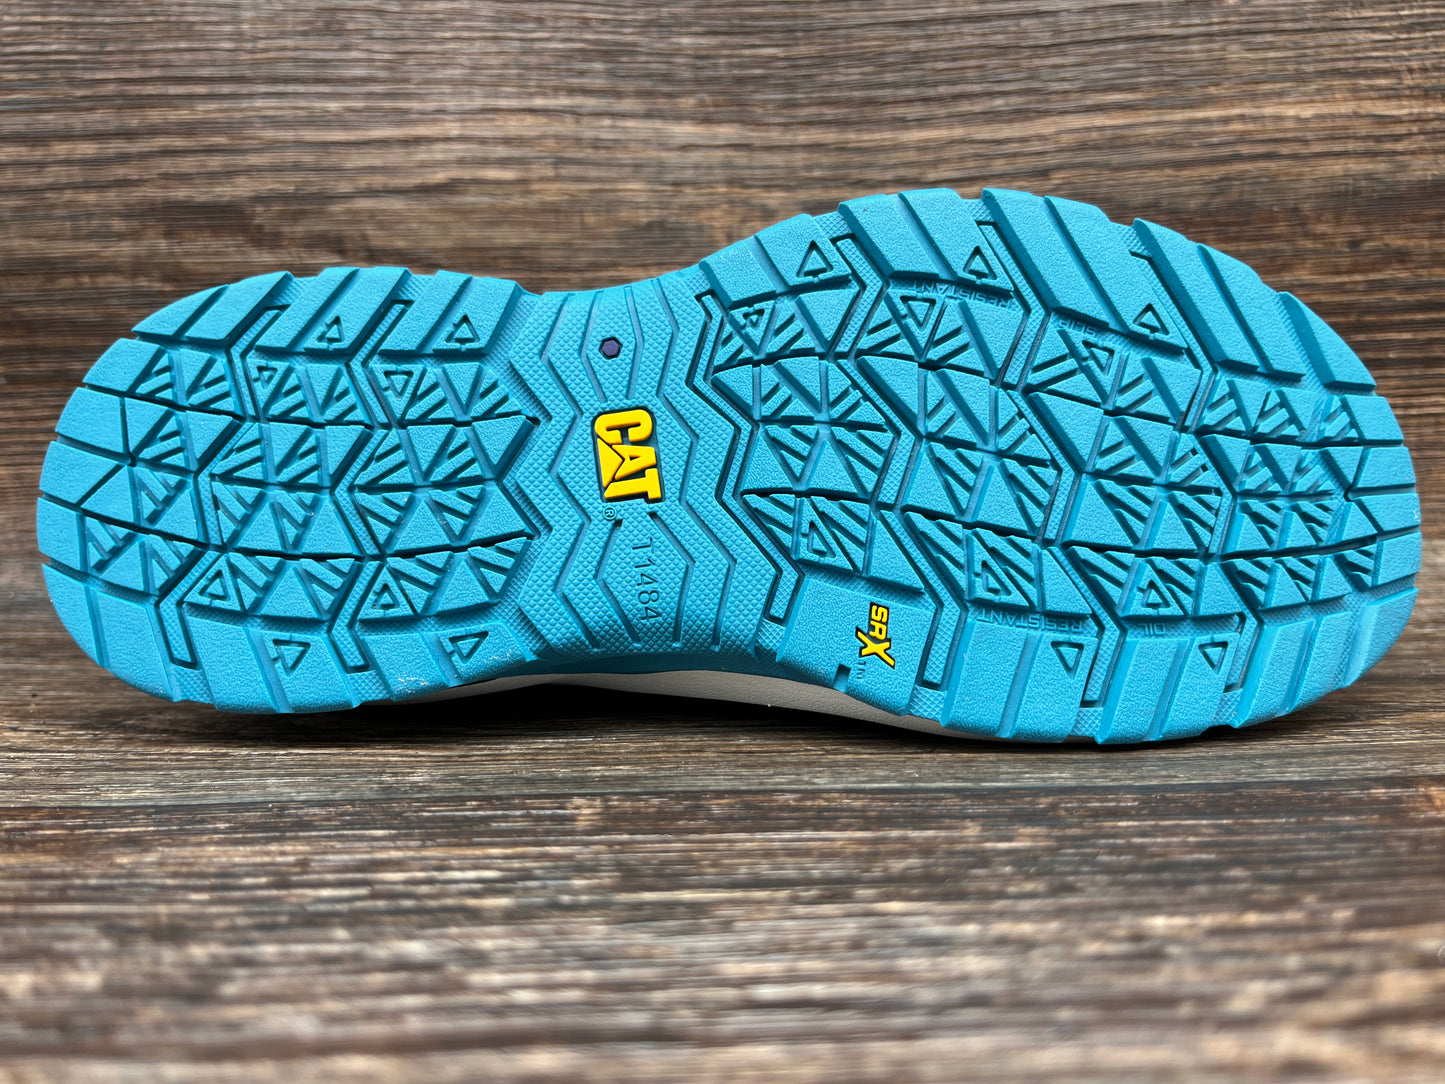 p91357 Women's Streamline 2.0 Composite Toe Athletic Shoe by Caterpillar